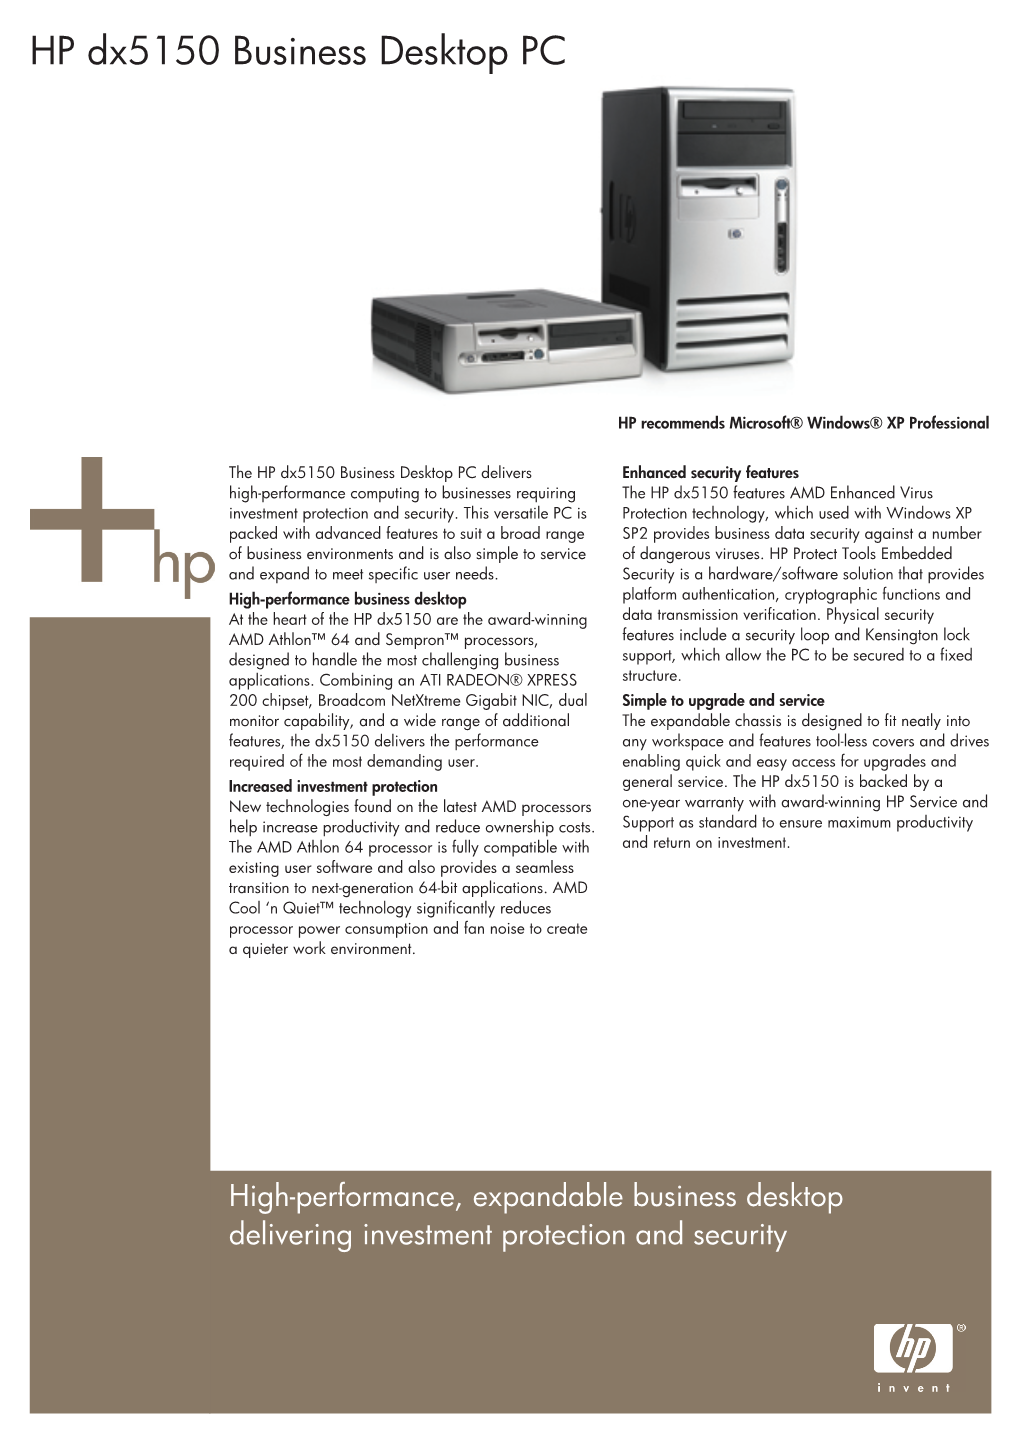 HP Commercial PC Datasheet